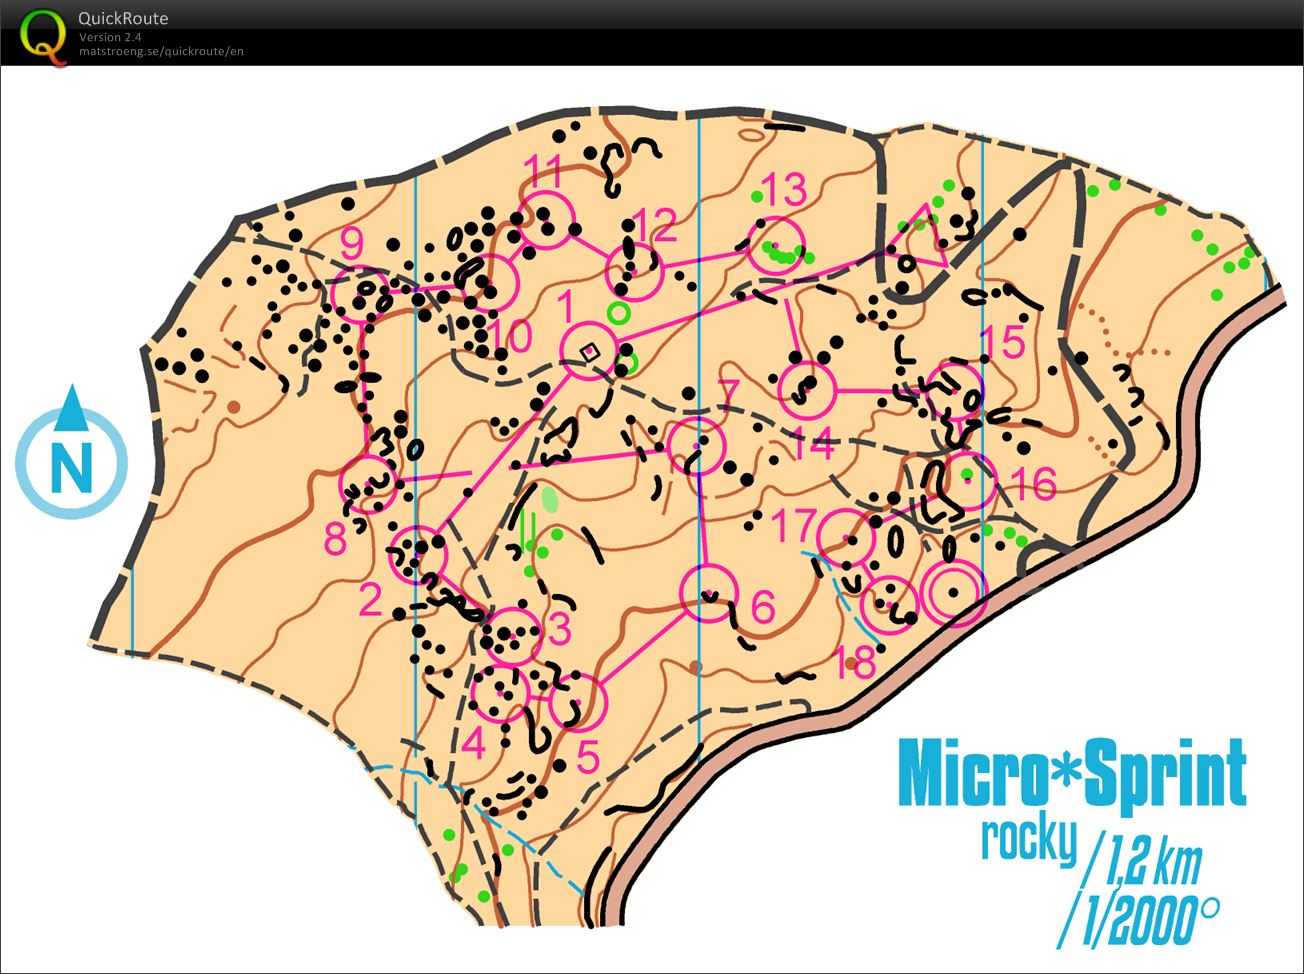 Micro-Sprint (30-11-2014)